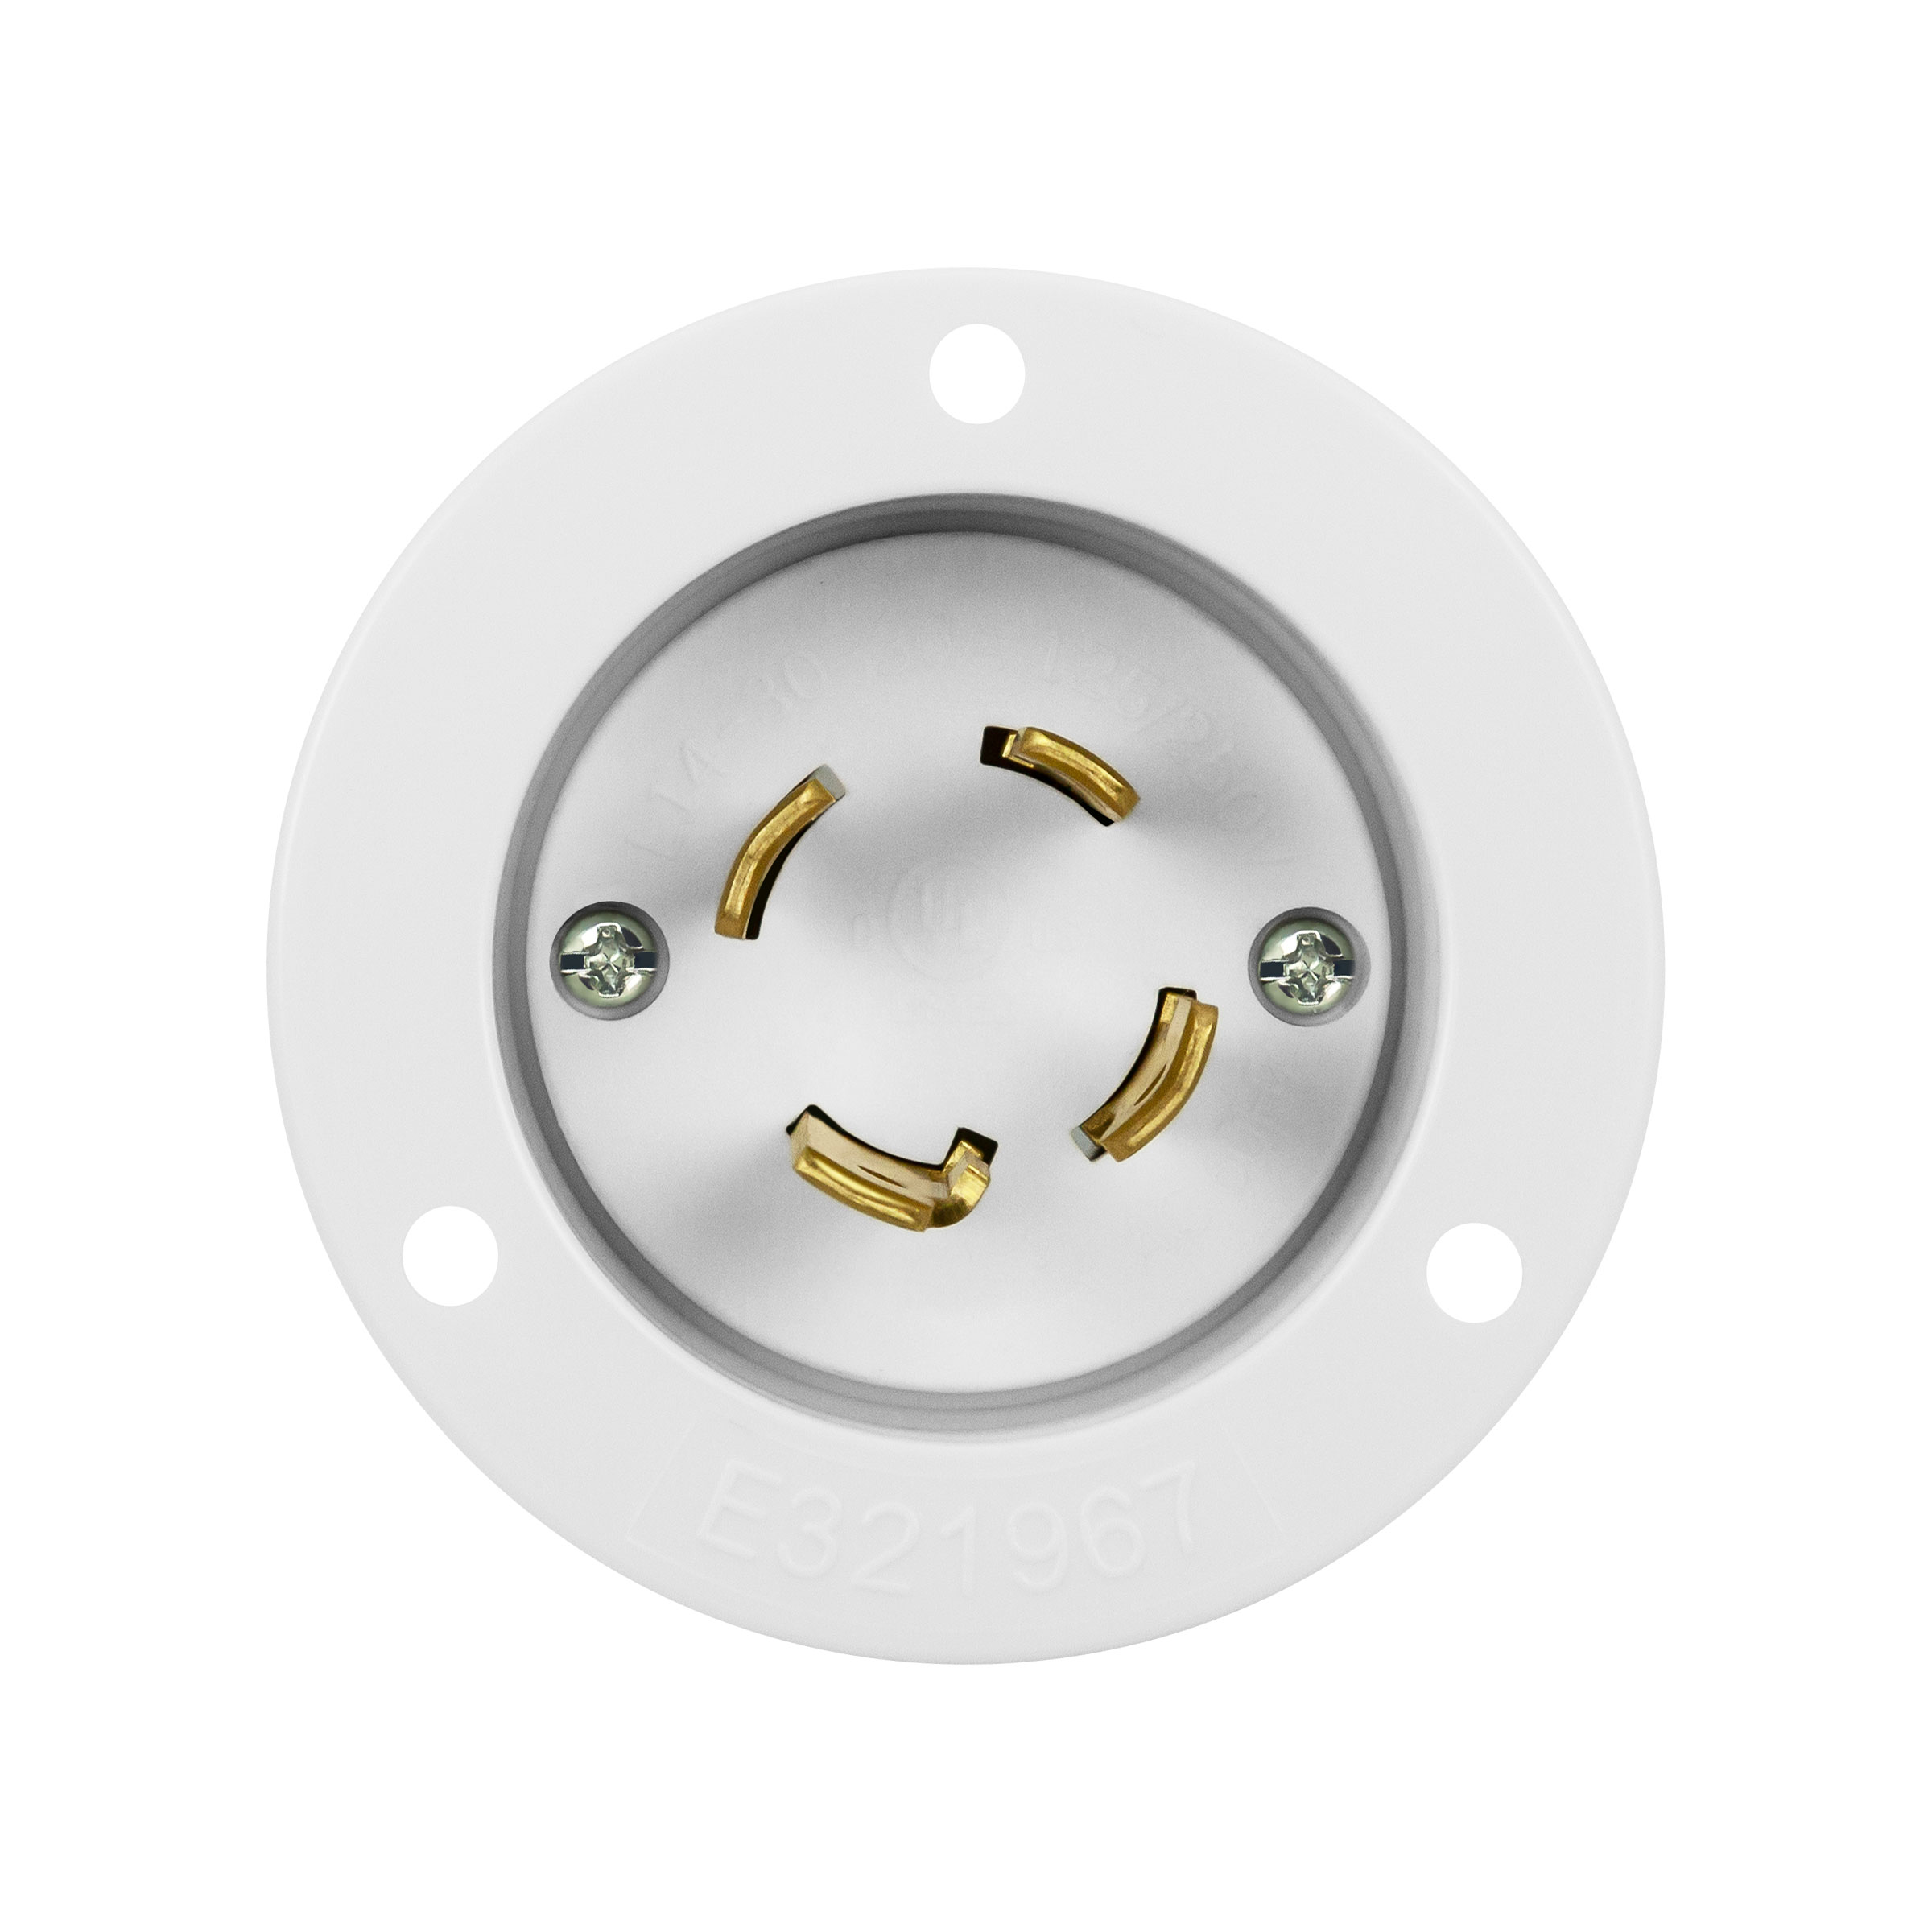 NEMA L14-30 Flanged Inlet Generator Plug Locking Receptacle Socket 30 Amp White